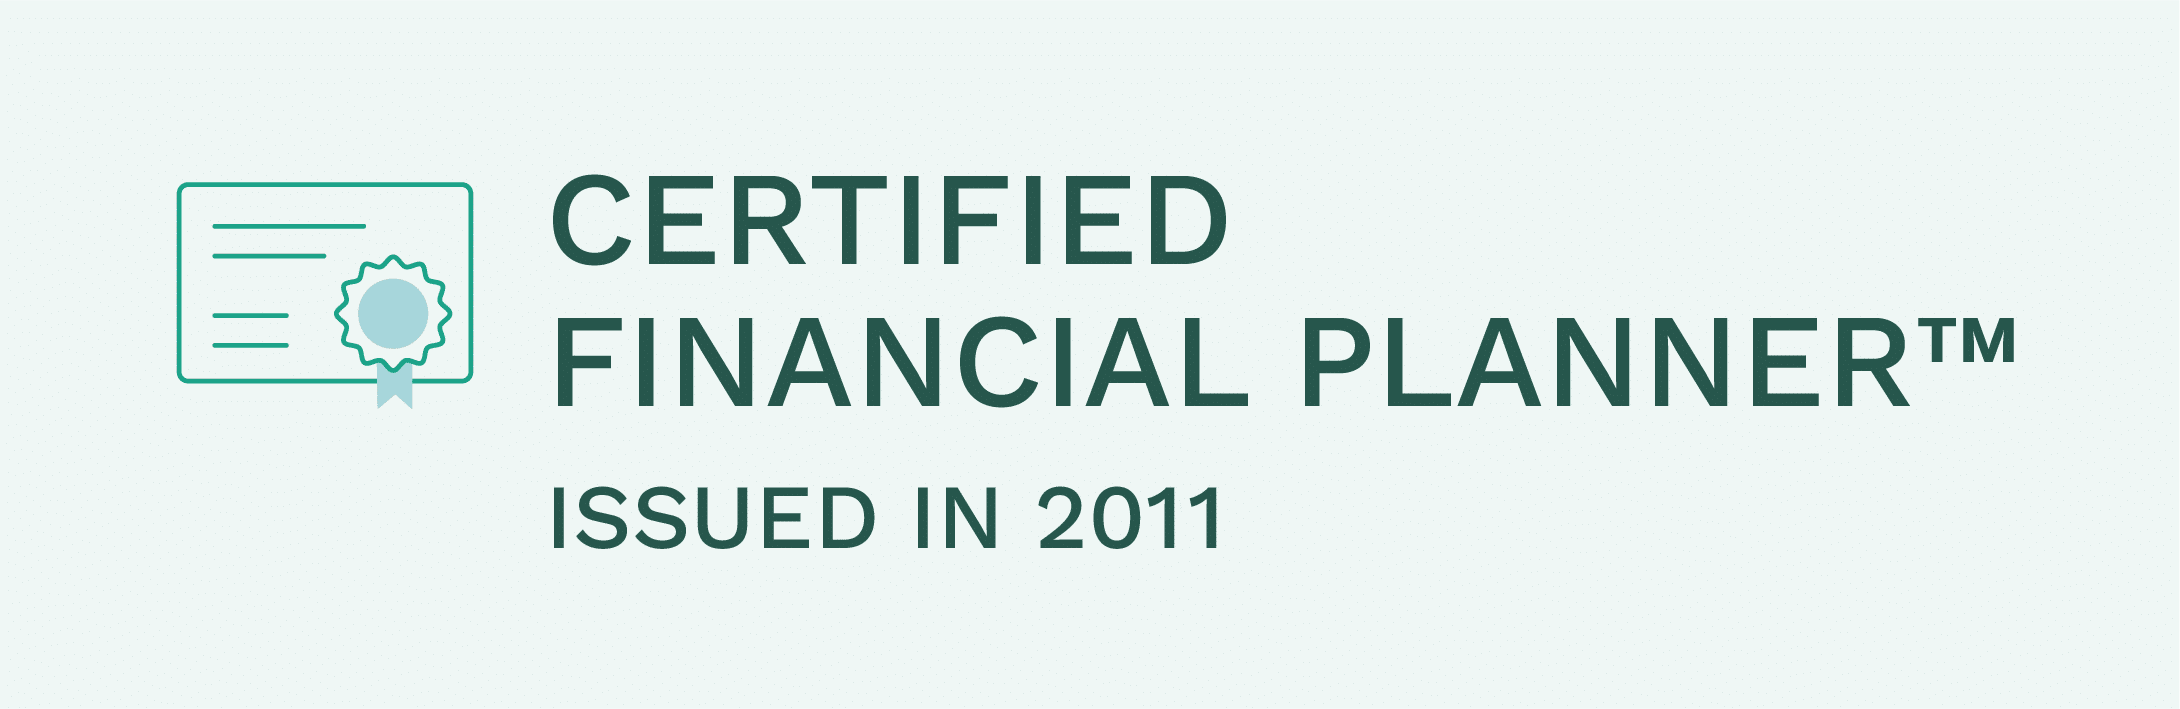 Archer Certification Financial Planner 2011